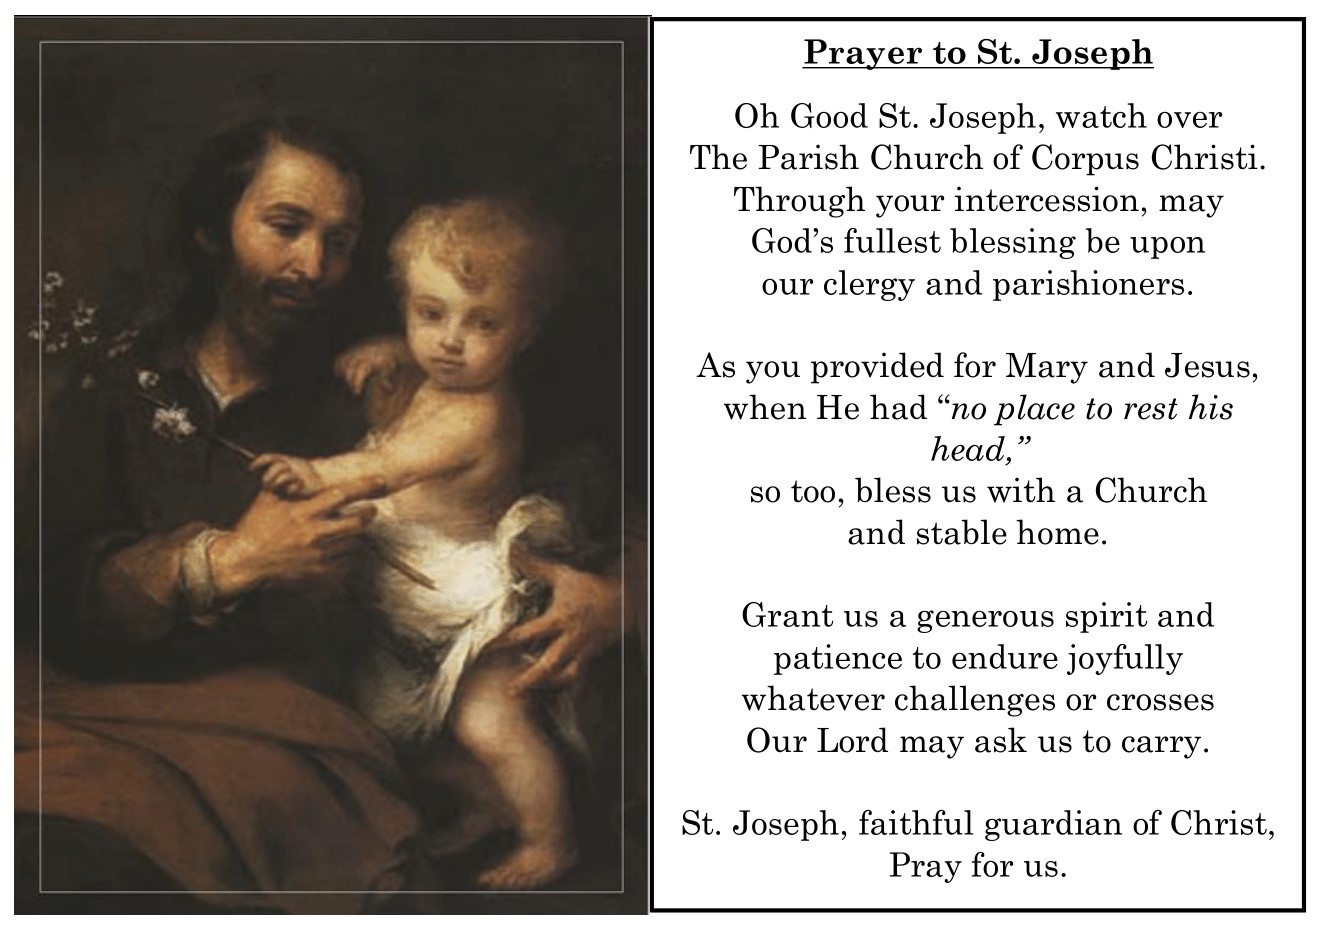 Prayer to St. Joseph 1